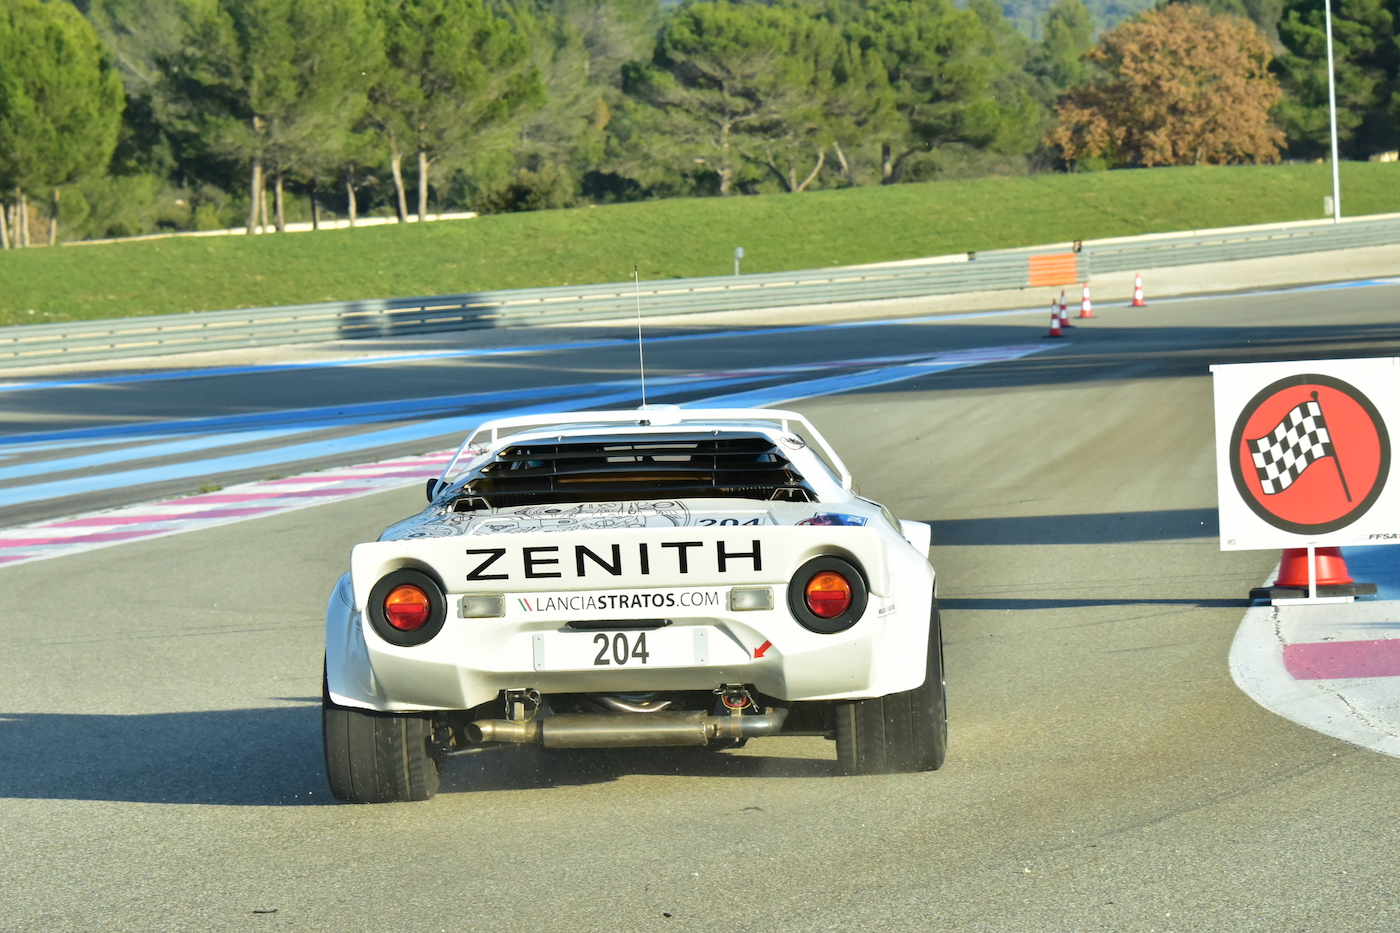 Lancia Stratos dans la course